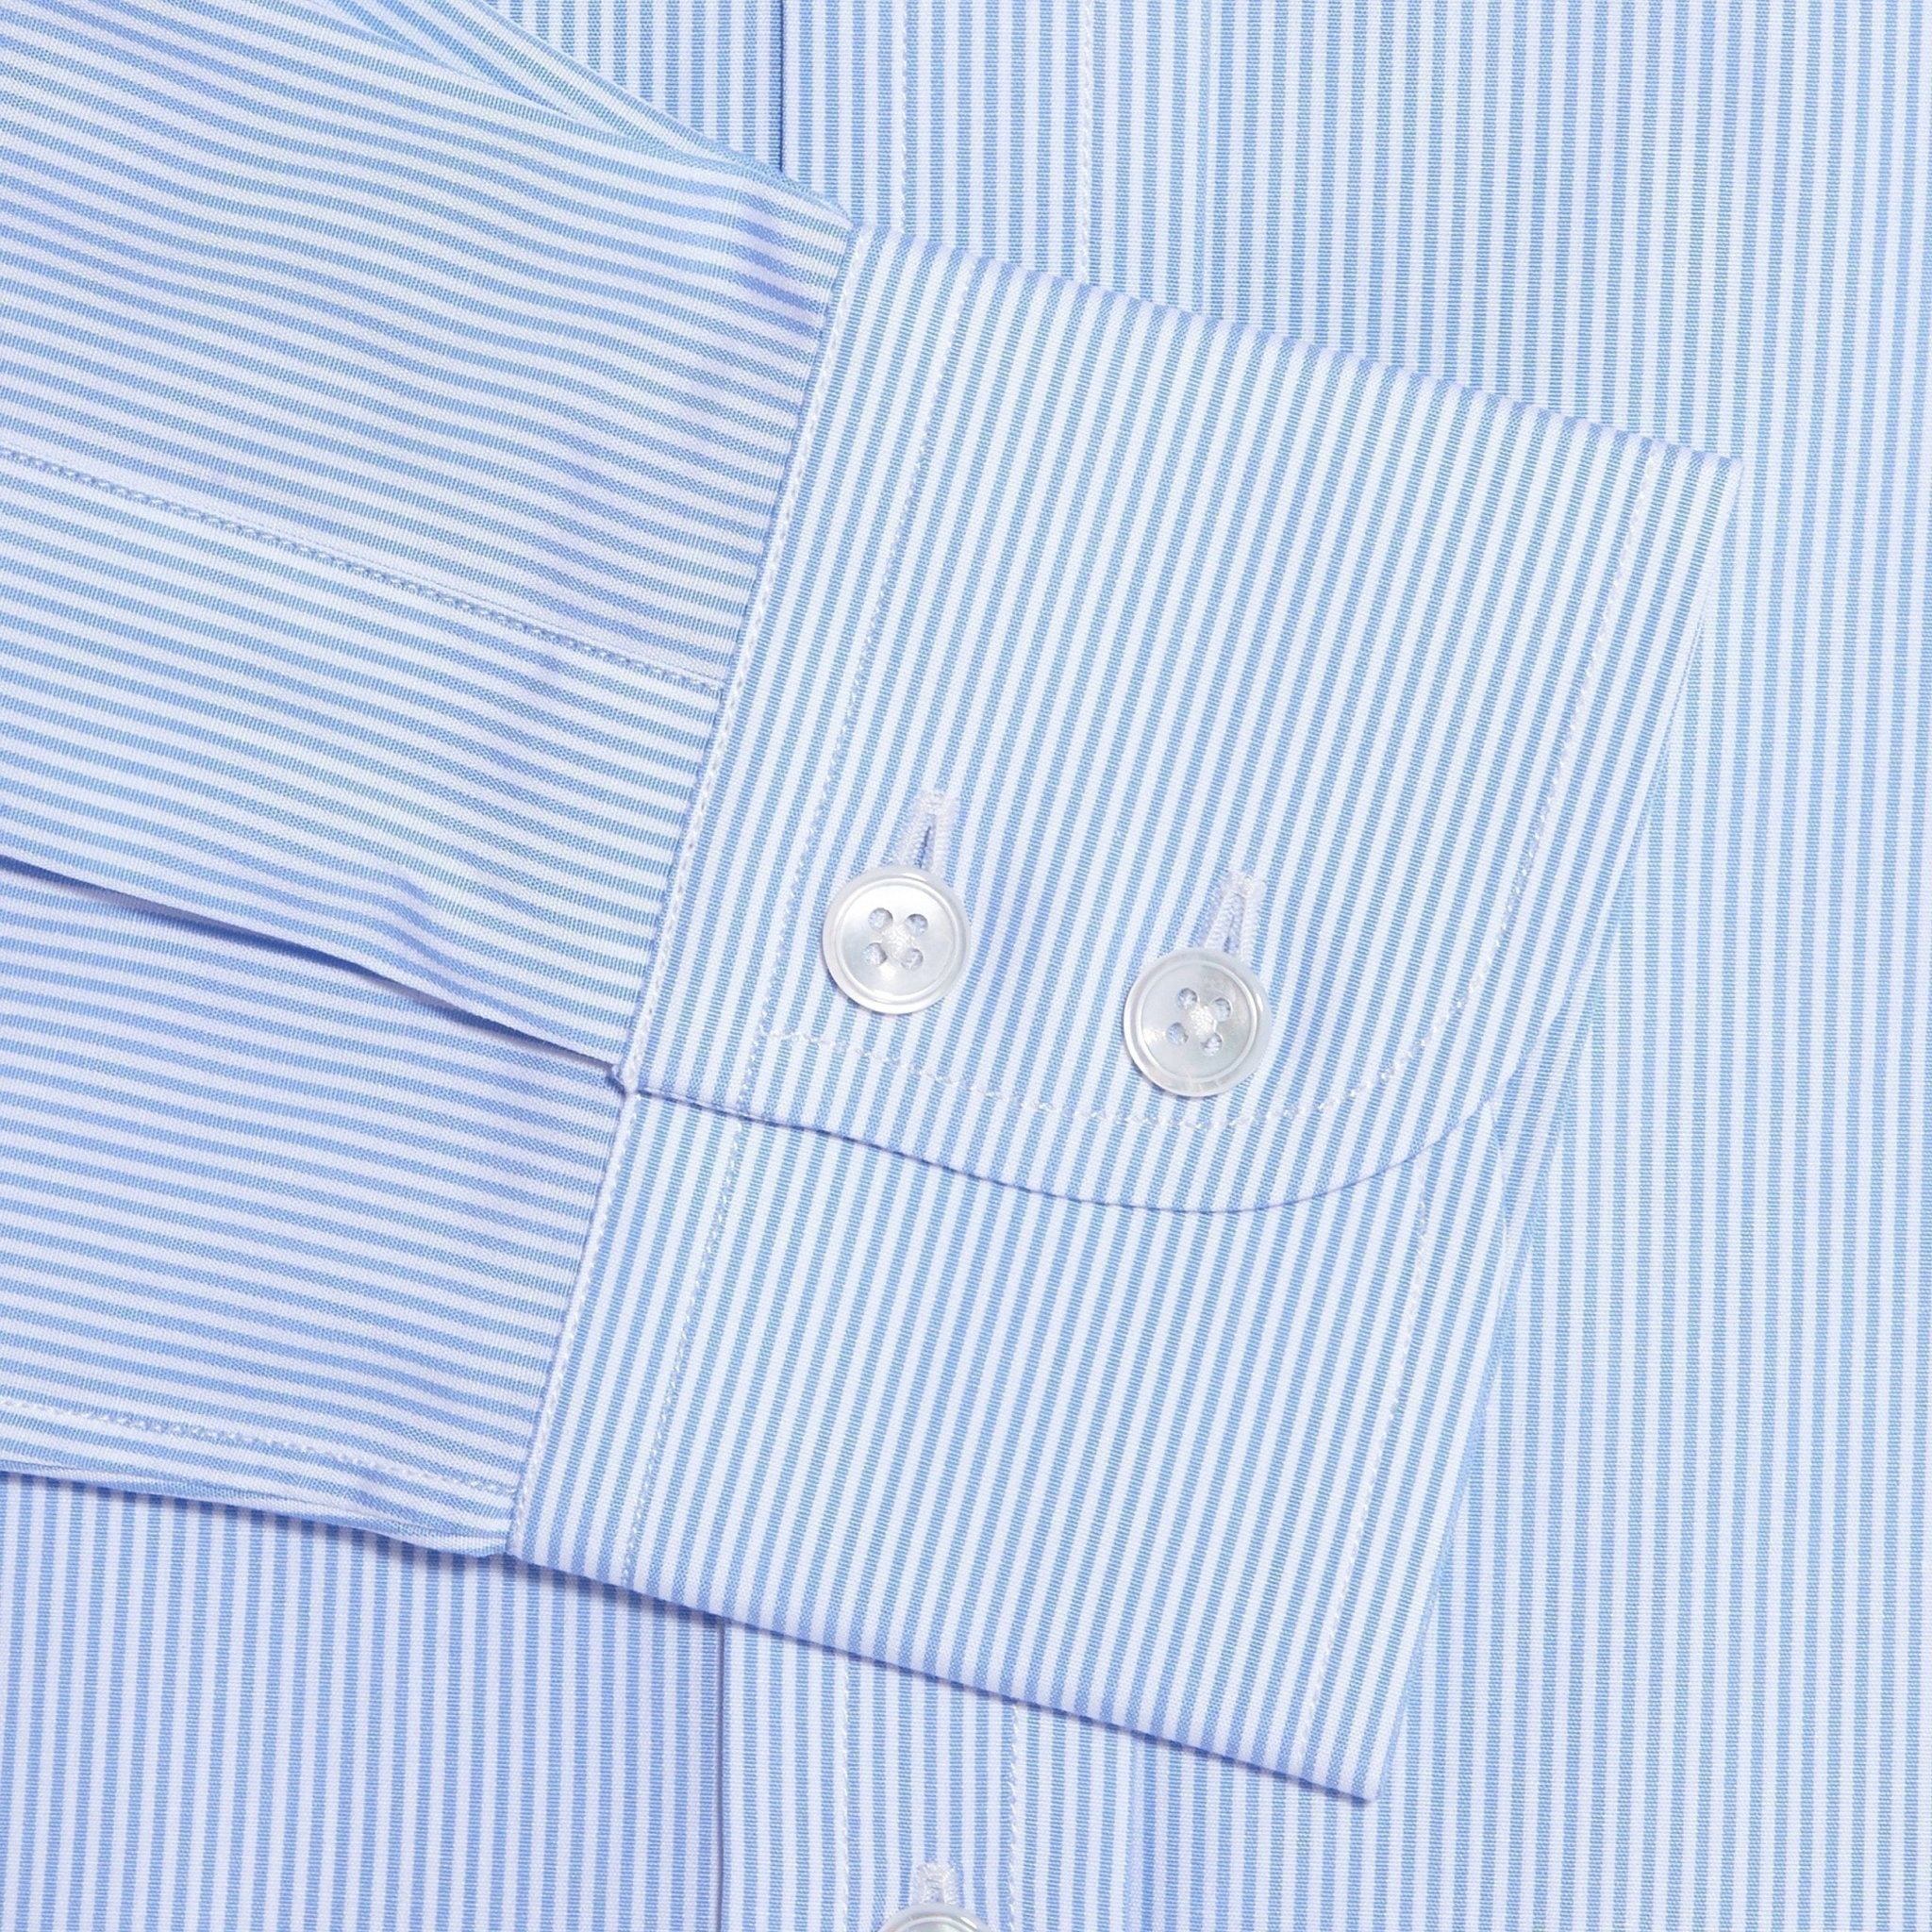 Contemporary Fit, Classic Collar, 2 Button Cuff Shirt in a Blue & White Fine Bengal Poplin Cotton - Hilditch & Key